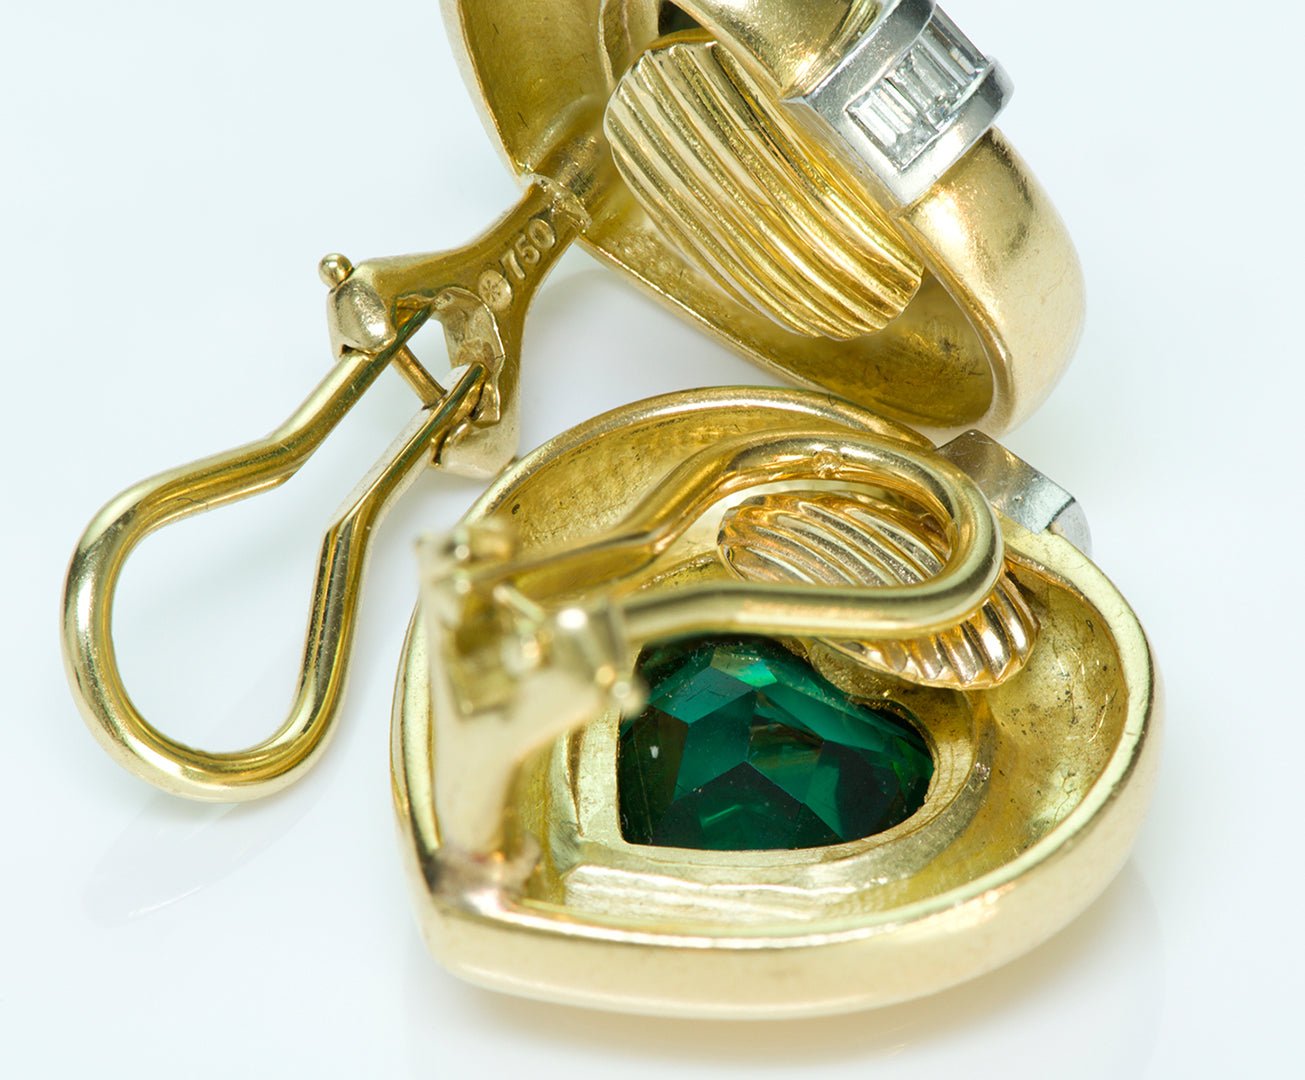 Heart Tourmaline Diamond Gold Earrings